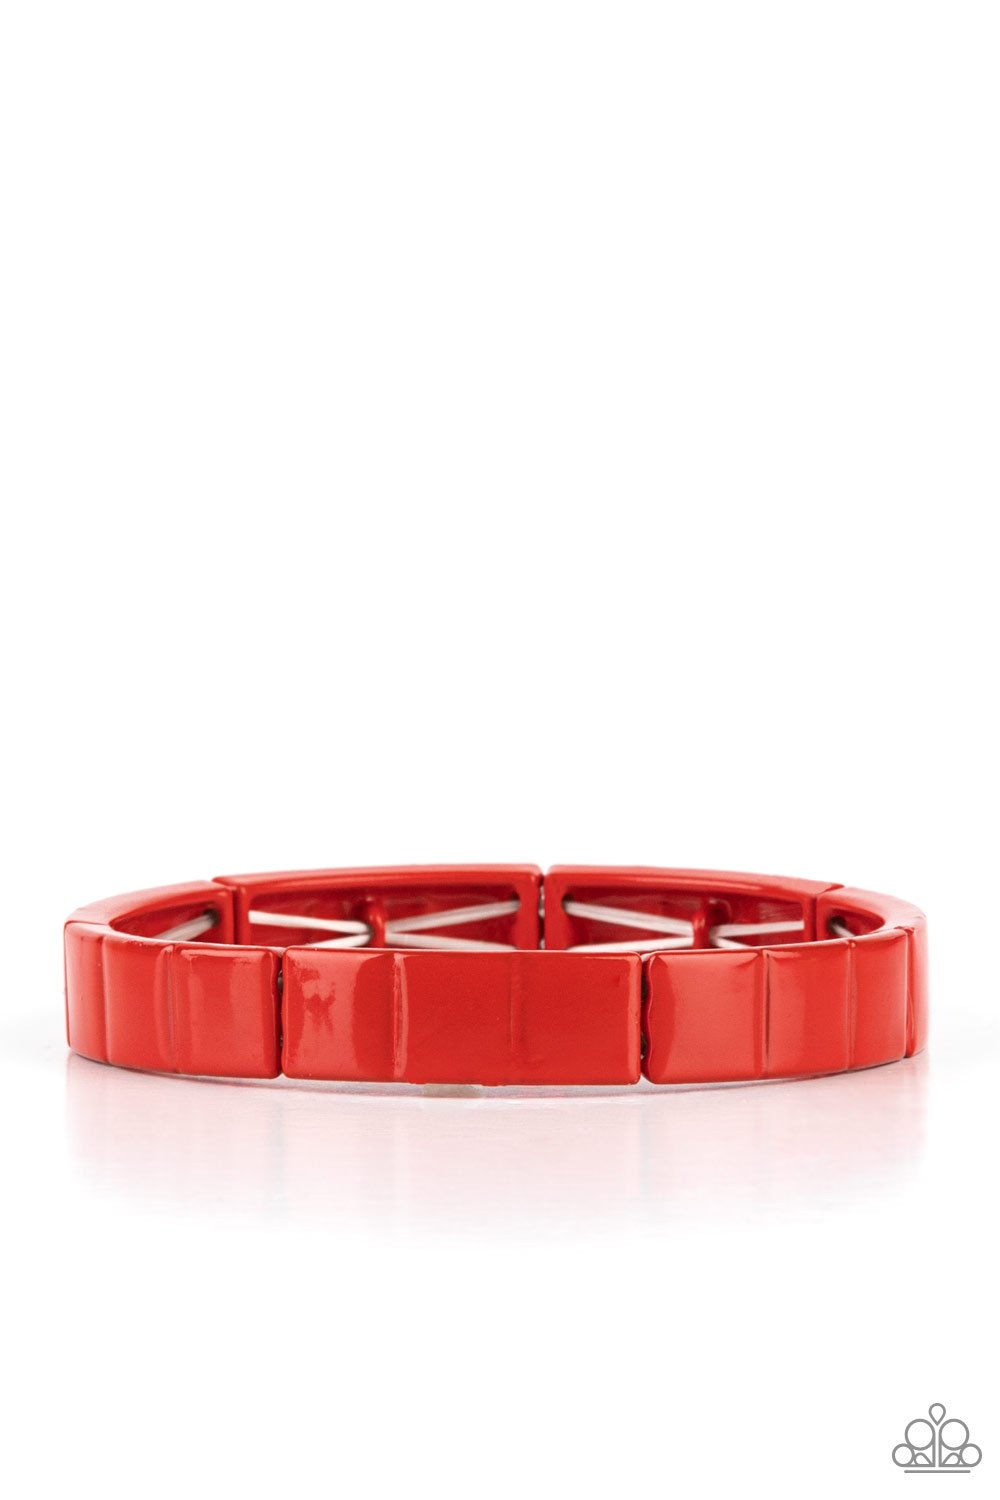 Material Movement - Red Bracelet - Daria's Blings N Things